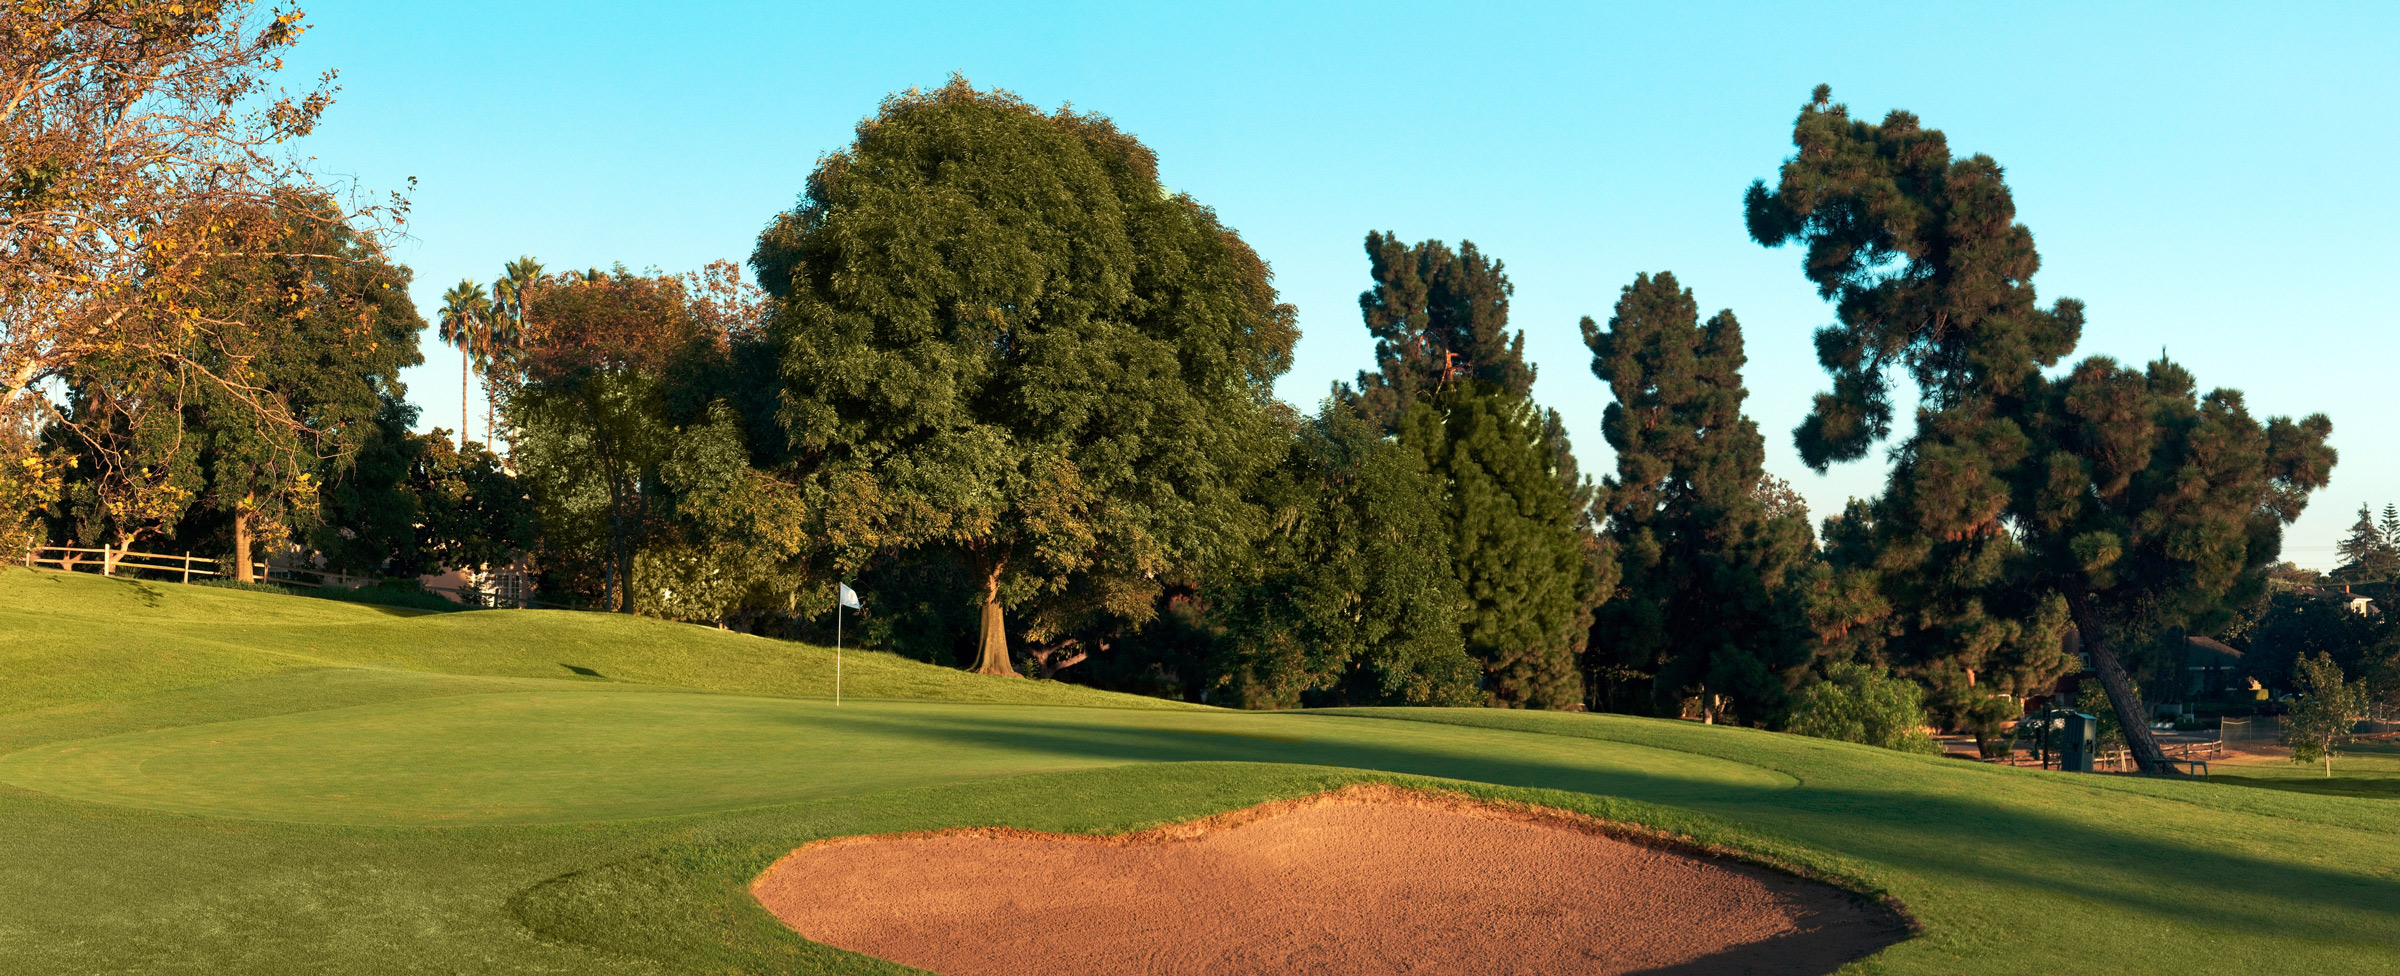 Recreation Park Golf Course Image Thumbnail